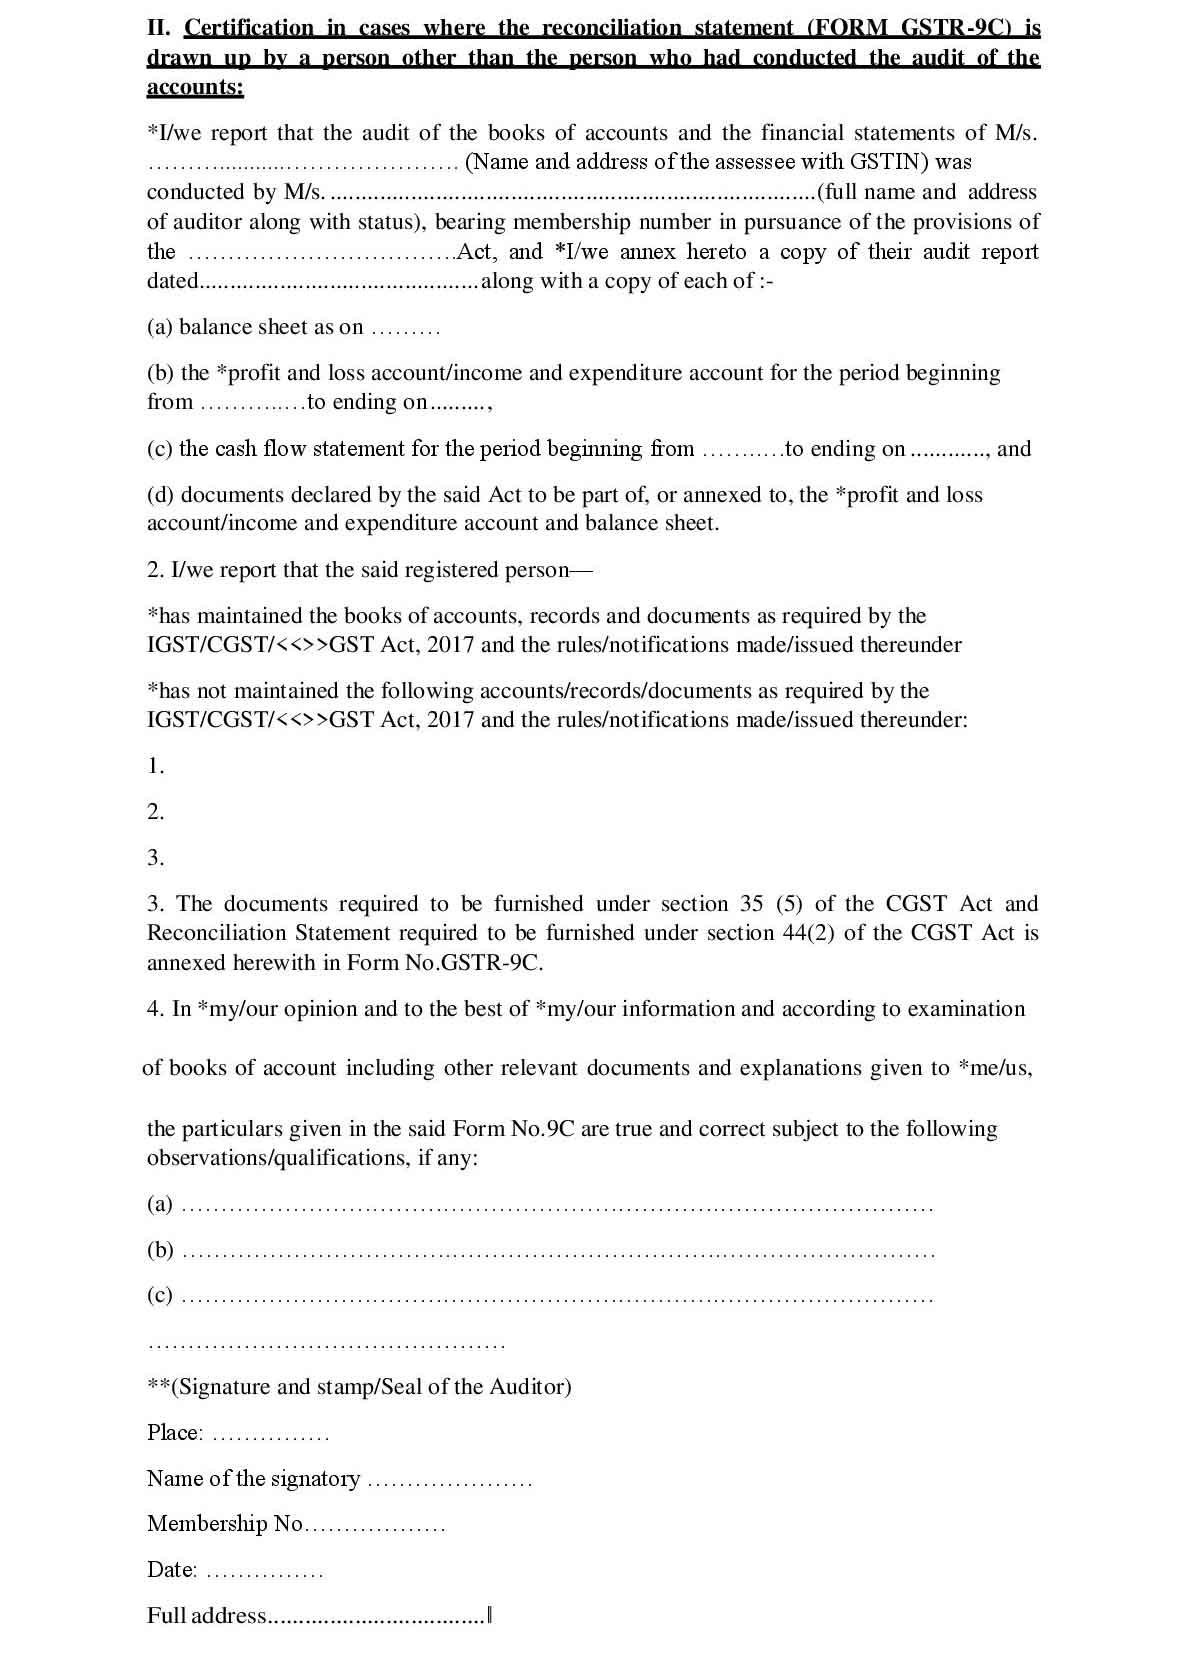 GSTR 9C Form Certification Part 2